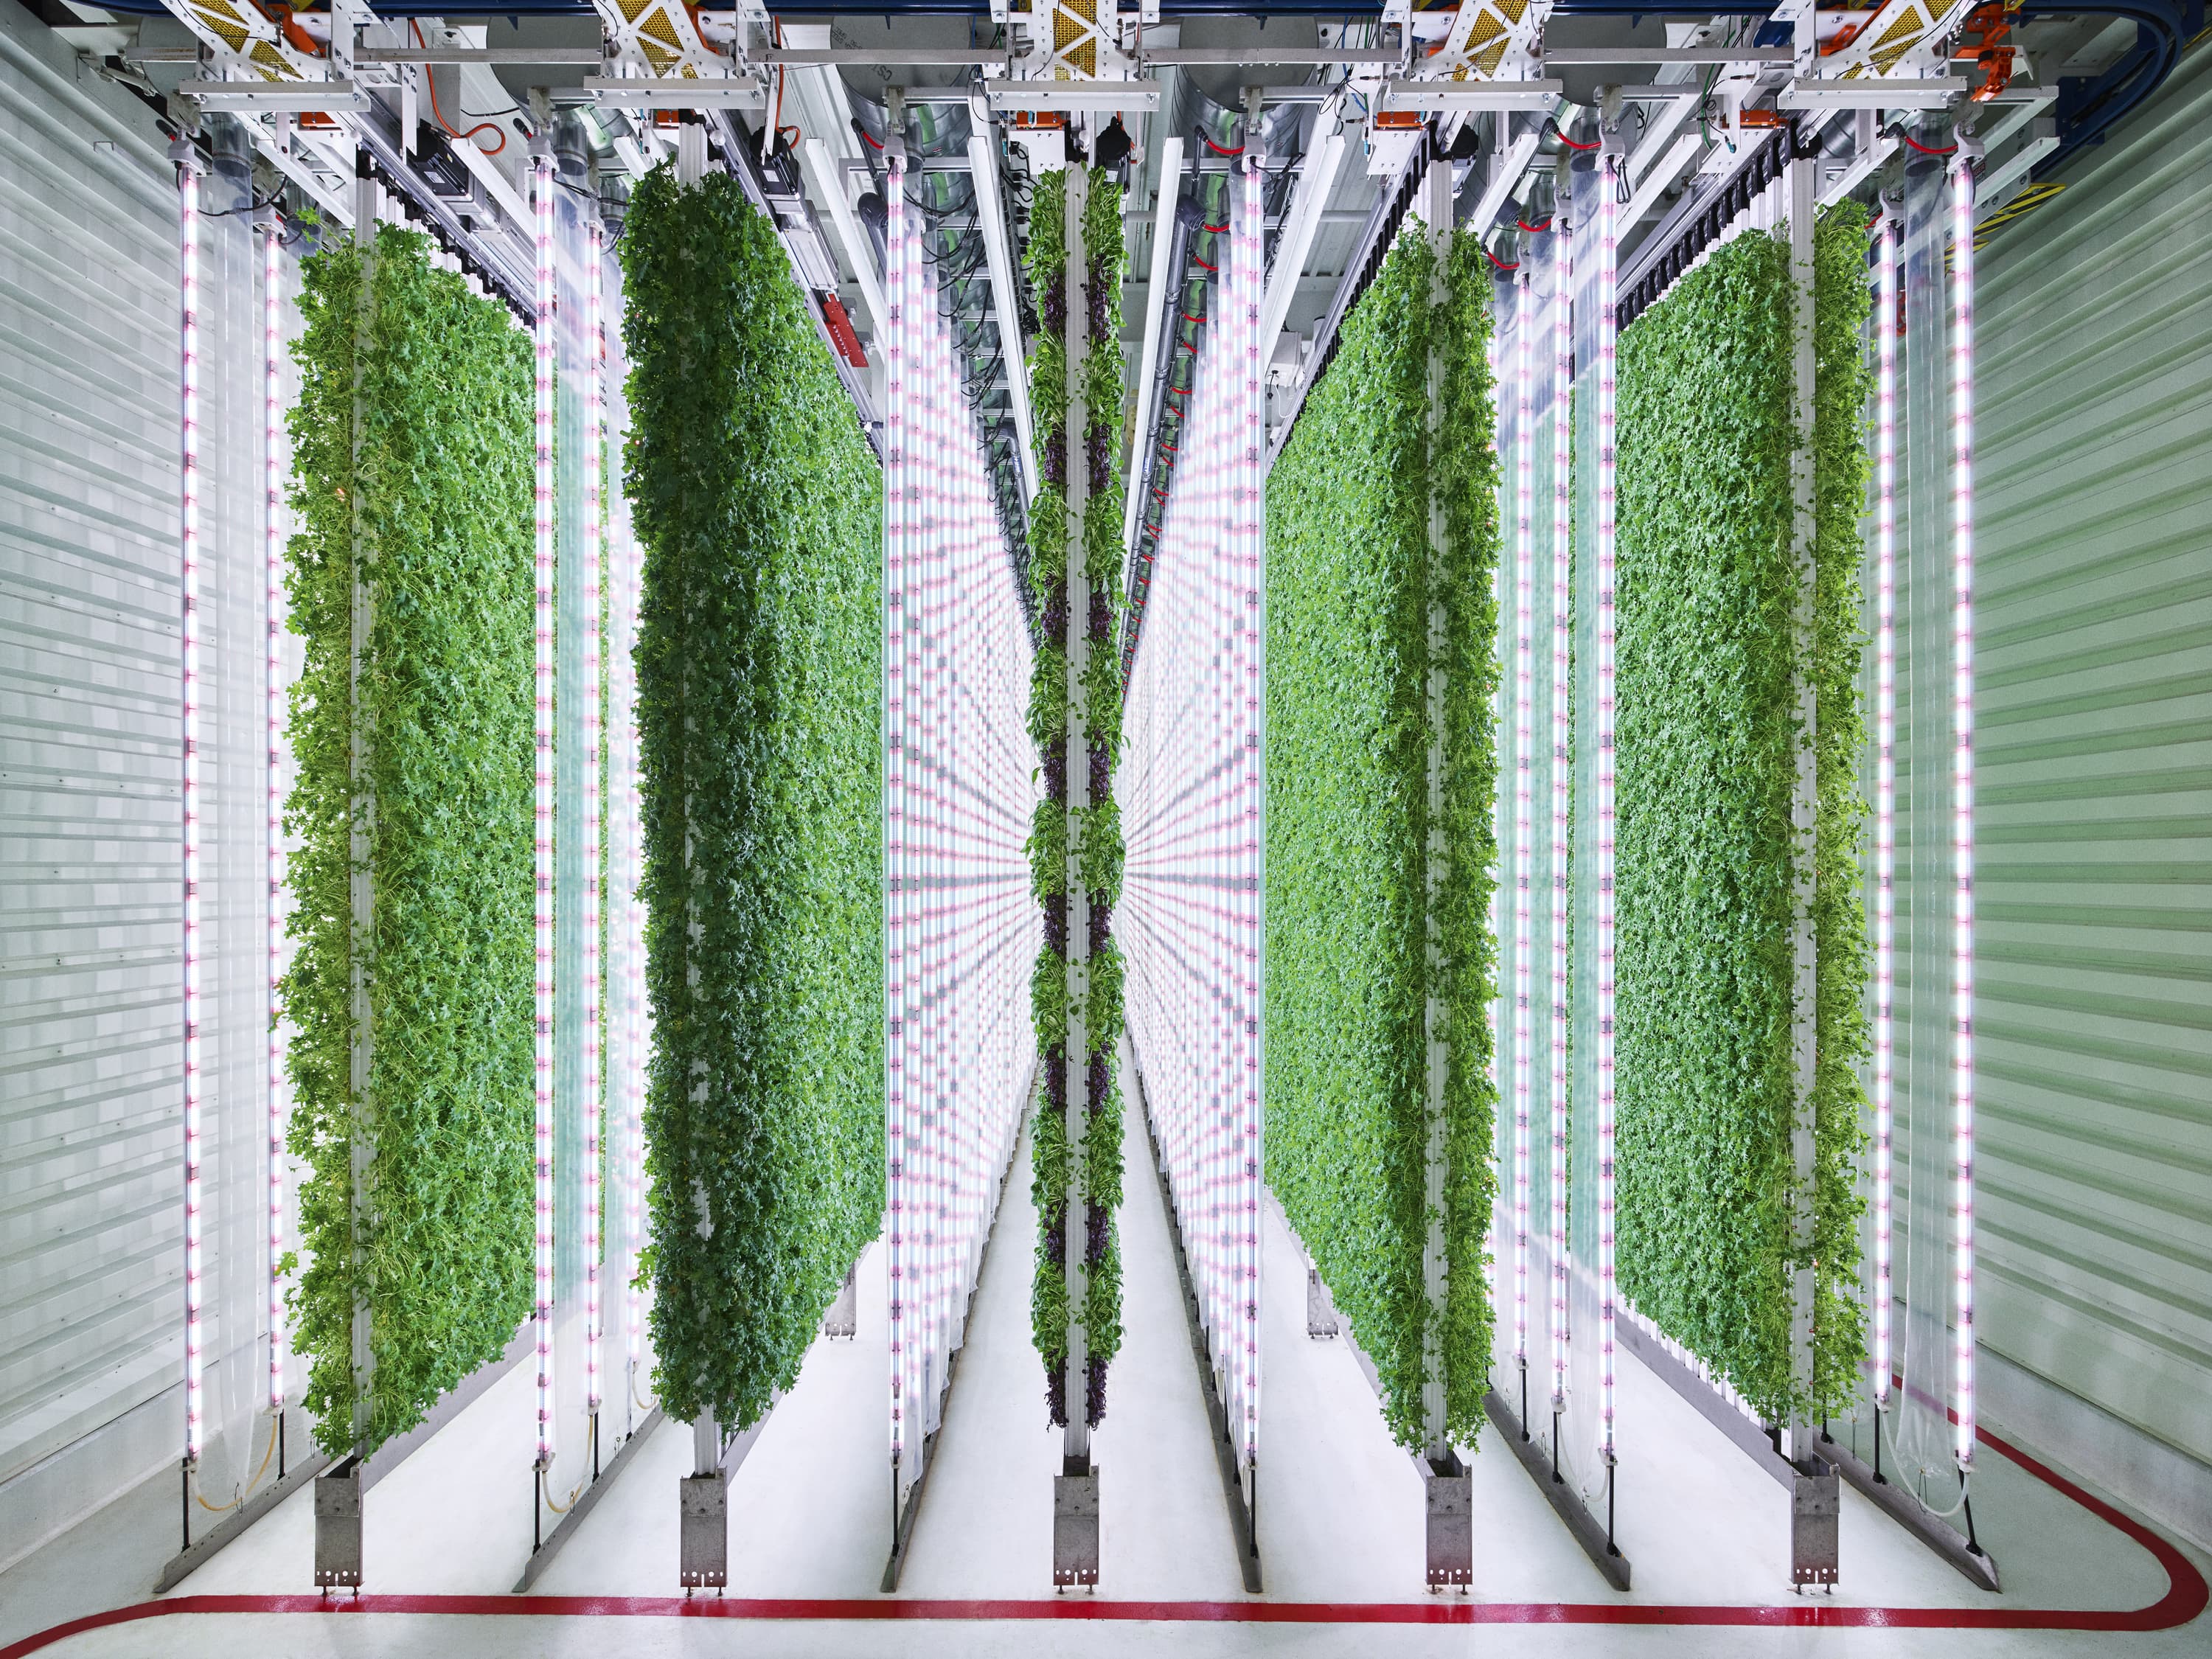 Walmart makes an investment in vertical farming start-up Plenty